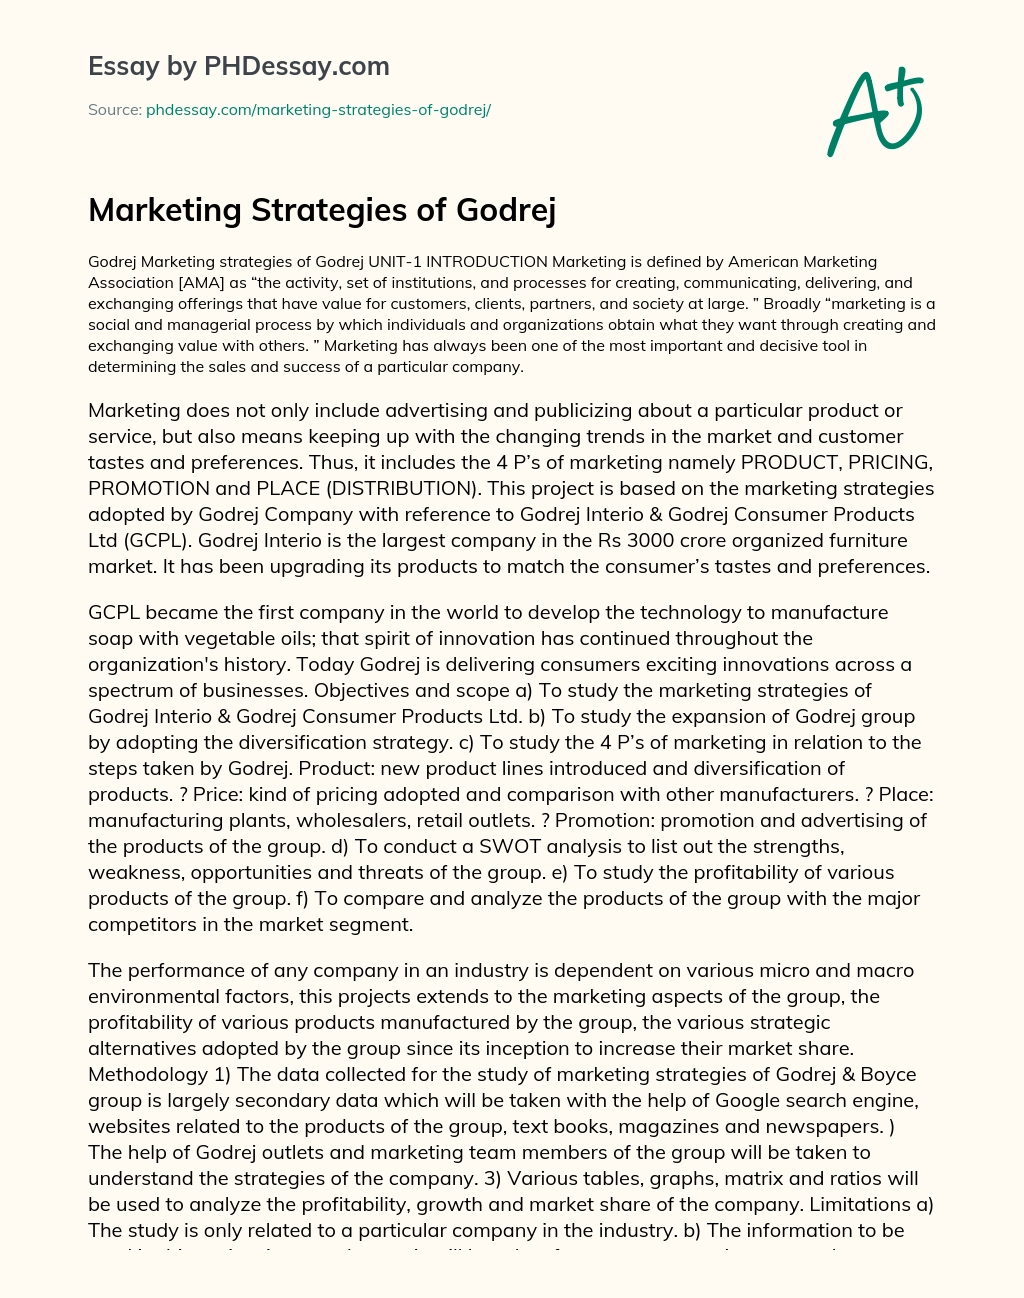 Marketing Strategies of Godrej essay